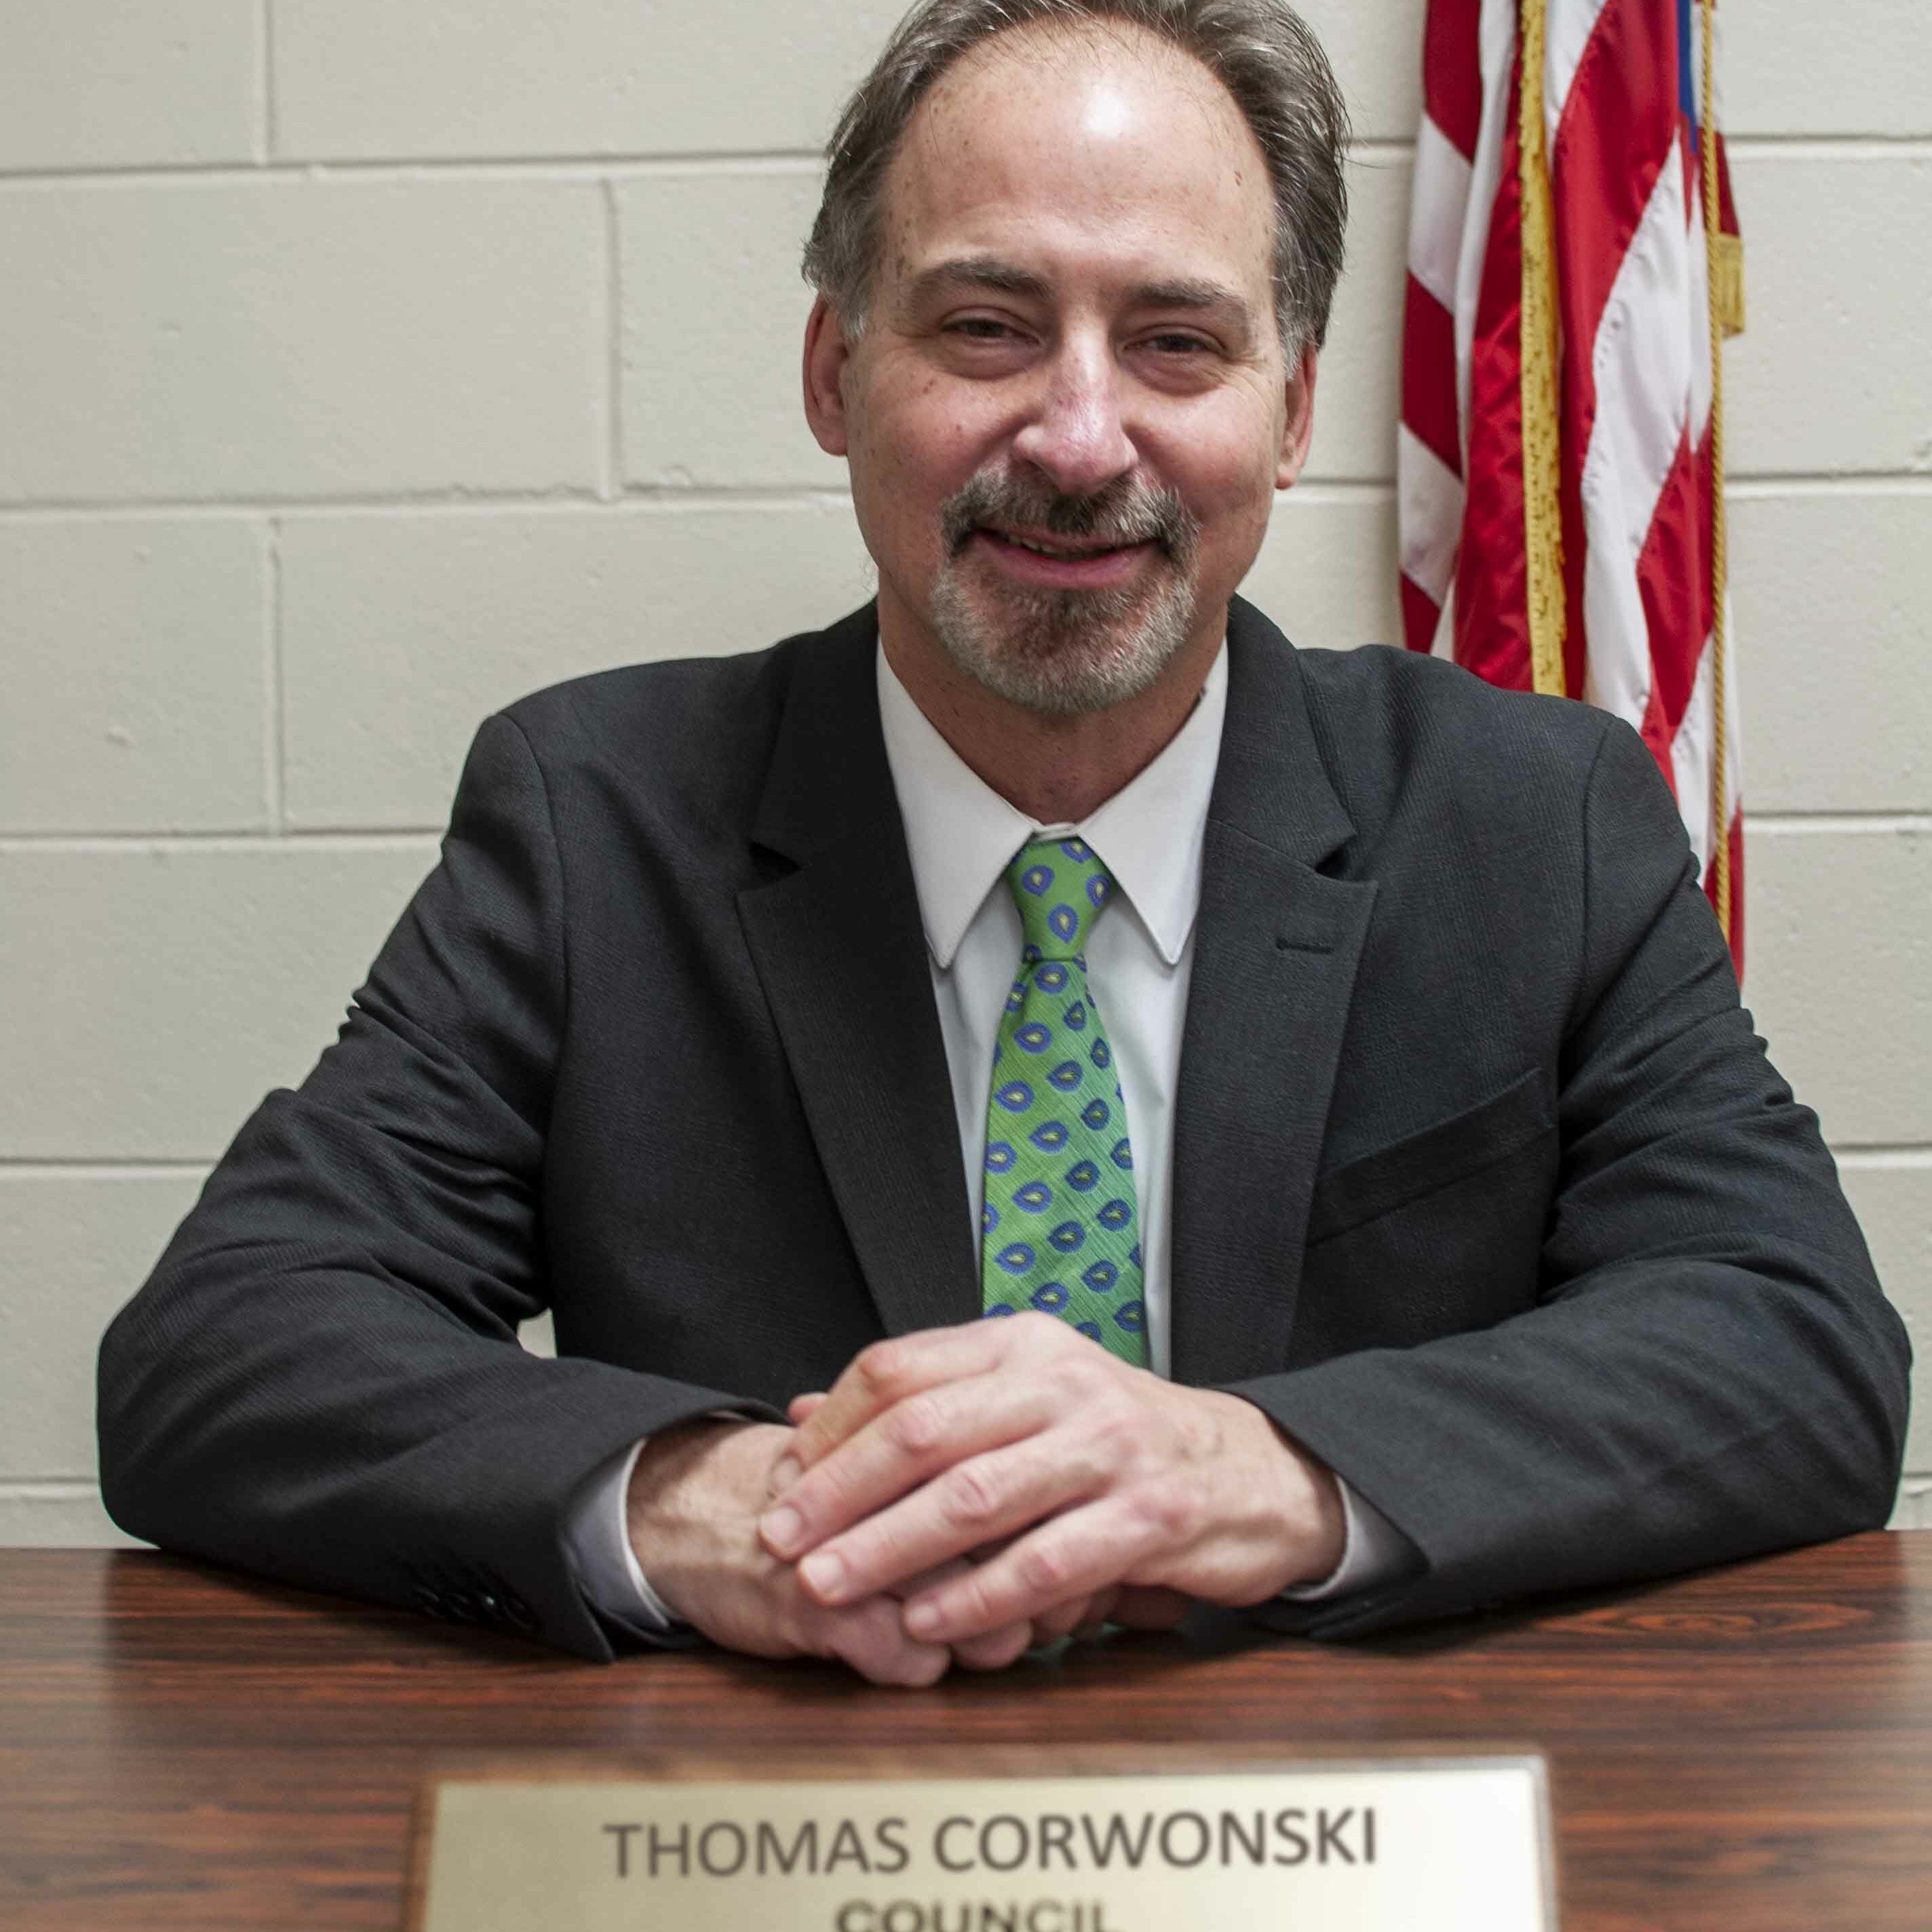 Thomas Corwonski